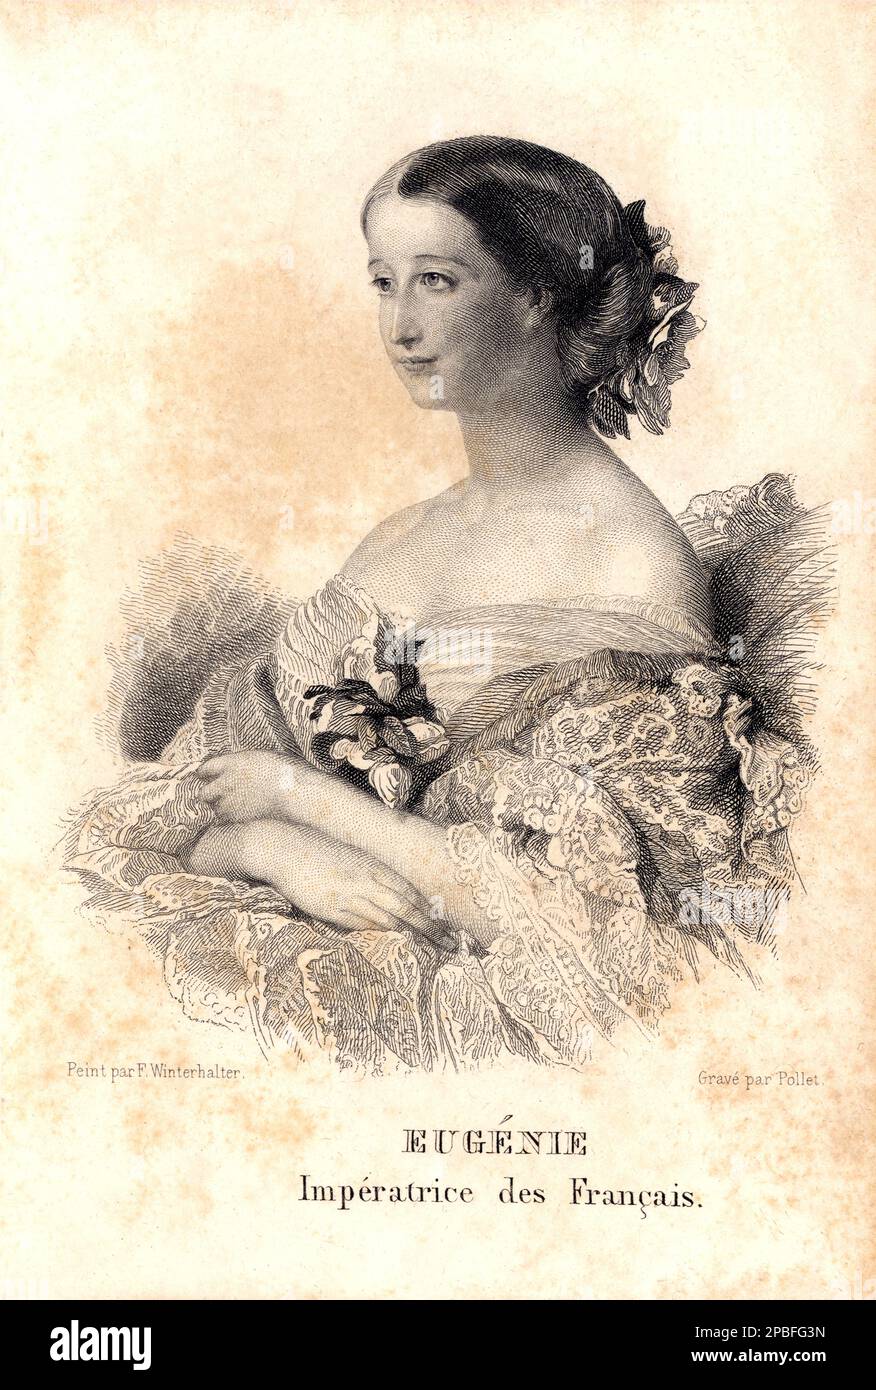 1856 , FRANCE. : The french Empress Eugenie ( Eugenia de Montijo de Guzman - 1826 - 1920 ) , wife of french Emperor Napoleon III ( 1808 - 1873 , son of Louis BONAPARTE and Hortense De Beauharnais ) . Engraving from ALMANACH DE GOTHA 1856 , from painting by F. WINTERHALTER , engraved by Pollet  - REALI - royalty - nobili -  Nobiltà  - Napoleone III - imperatrice - ritratto - RISORGIMENTO -  collo - neck - chignon - neckopening - decollete' - scollatura - flowers - fiore - fiori  - pizzo - lace - Eugenia  ----  Archivio GBB Stock Photo